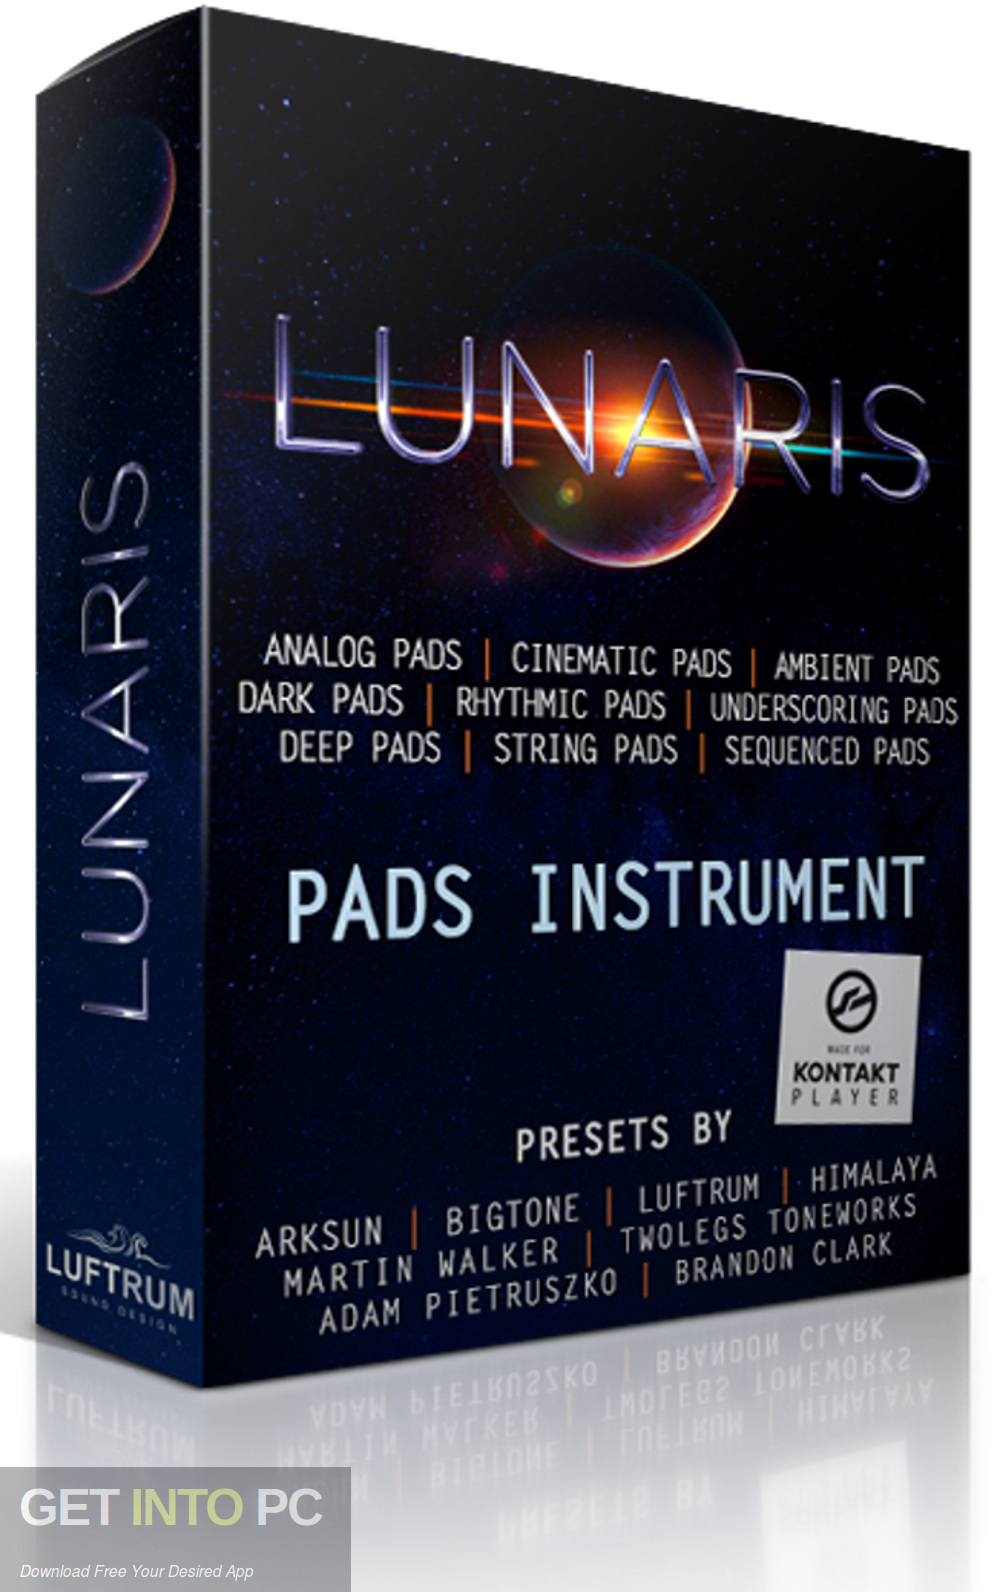 Luftrum - Lunaris Pads (KONTAKT) Free Download-GetintoPC.com